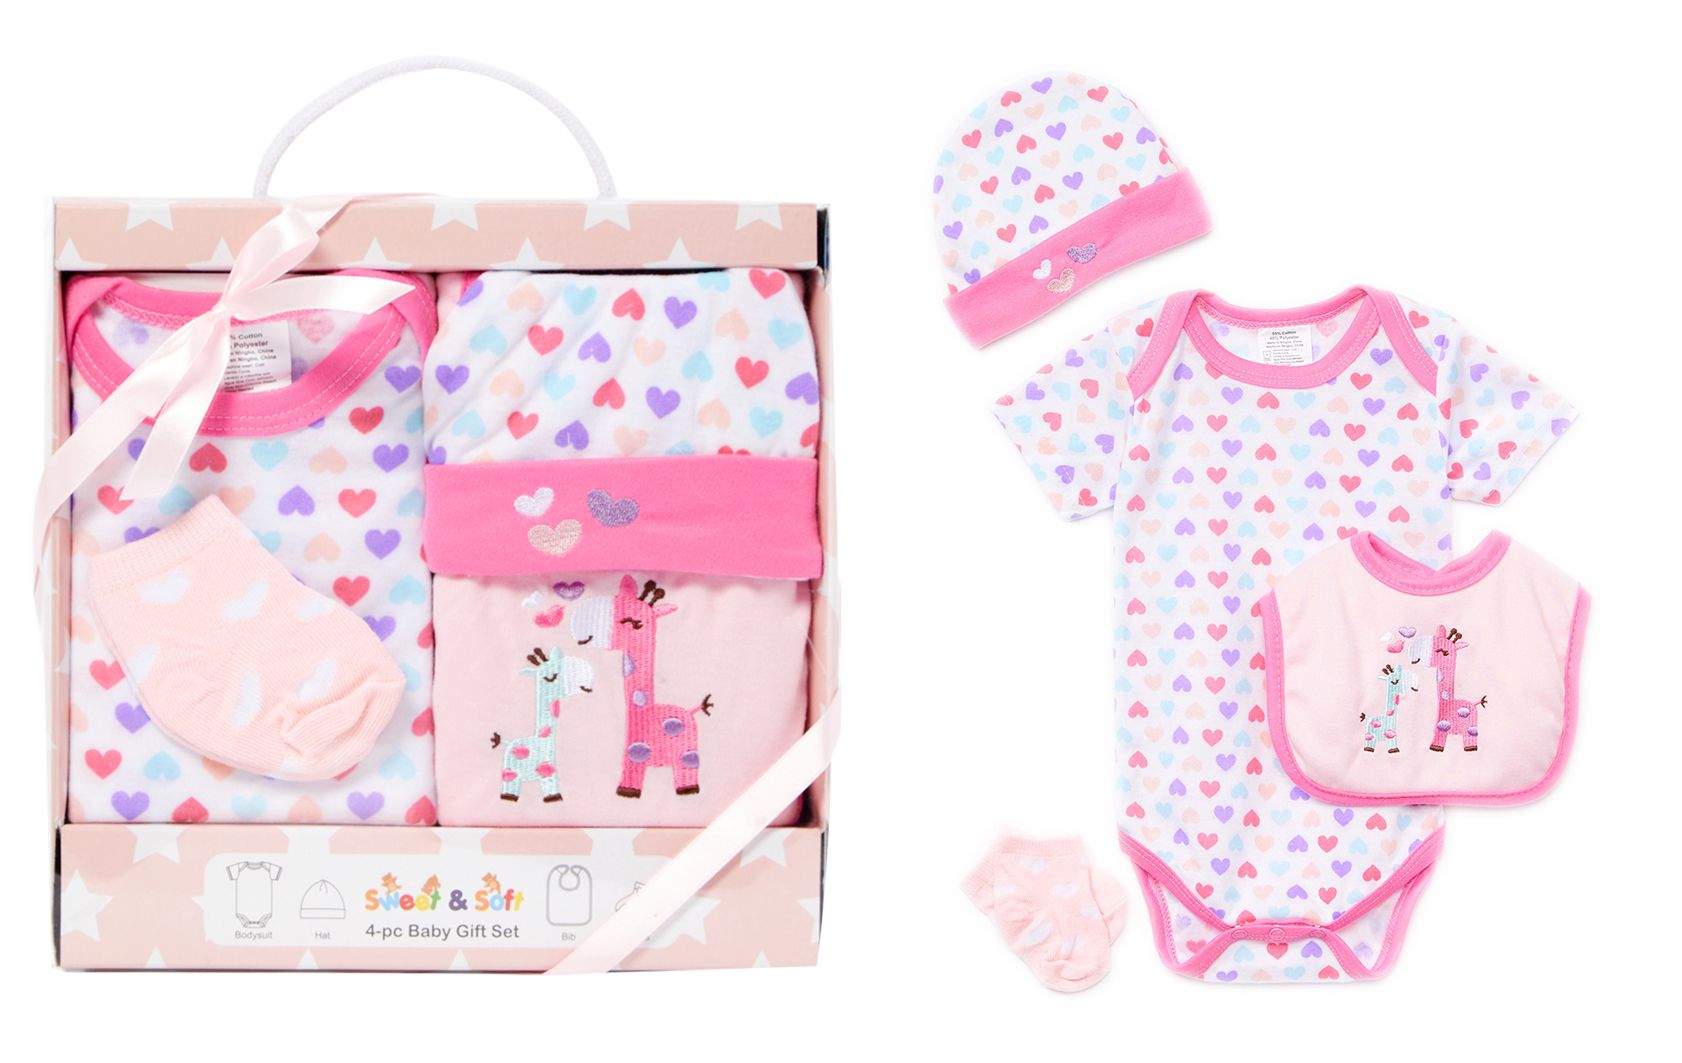 4 PC. Baby Boy's Gift Box Sets w/ Embroidered Giraffe & Heart Print